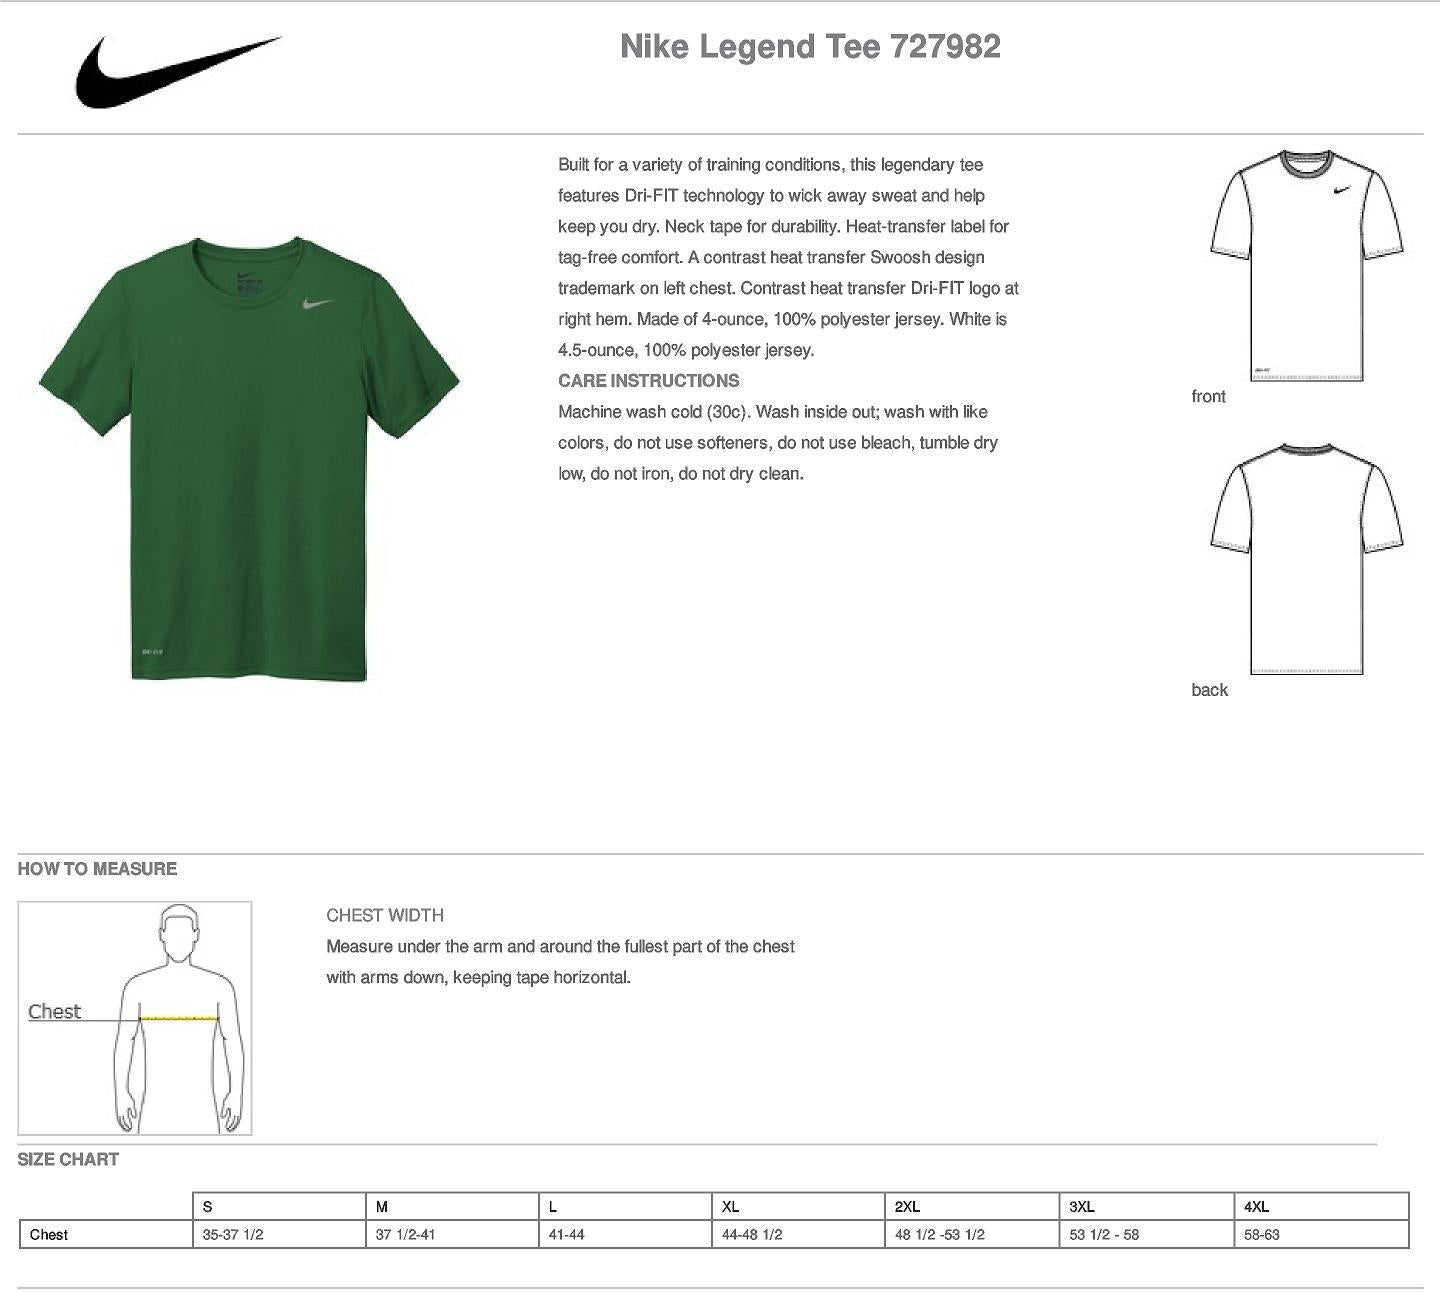 Nike Legend Tee 2403